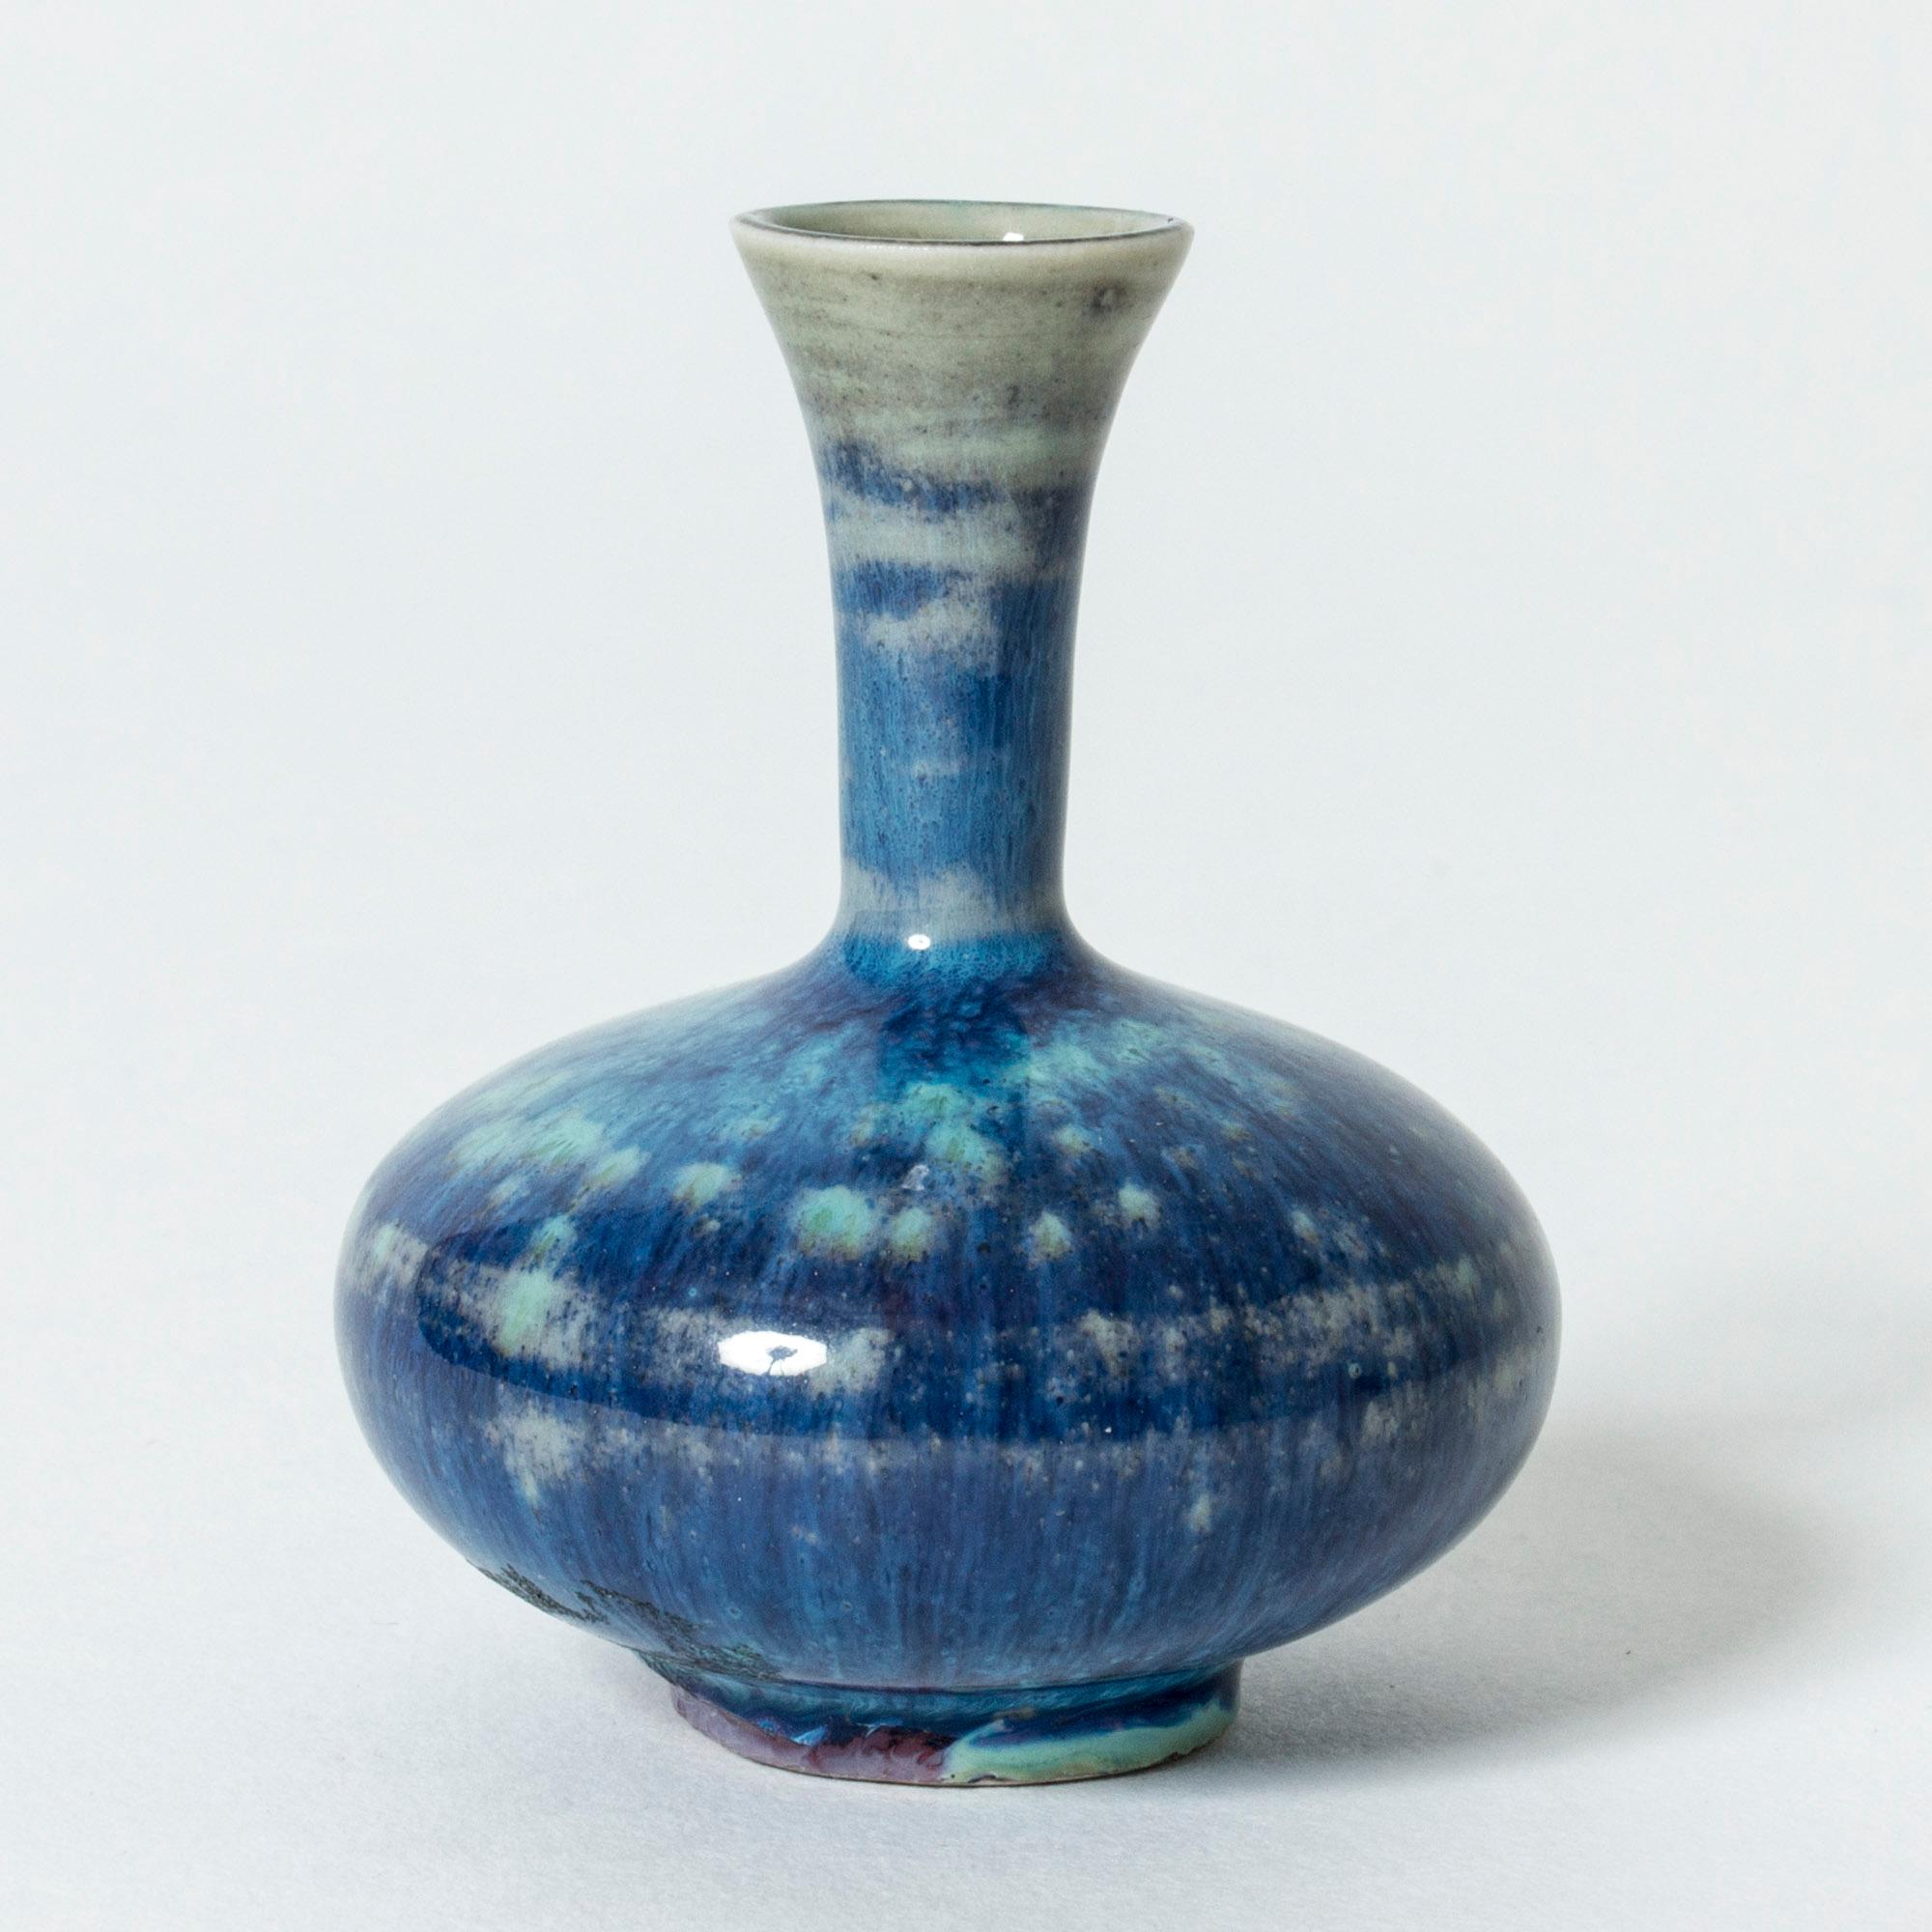 Beautiful miniature stoneware vase by Berndt Friberg. Vibrant “Aniara” glaze in blue and aquamarine tones.